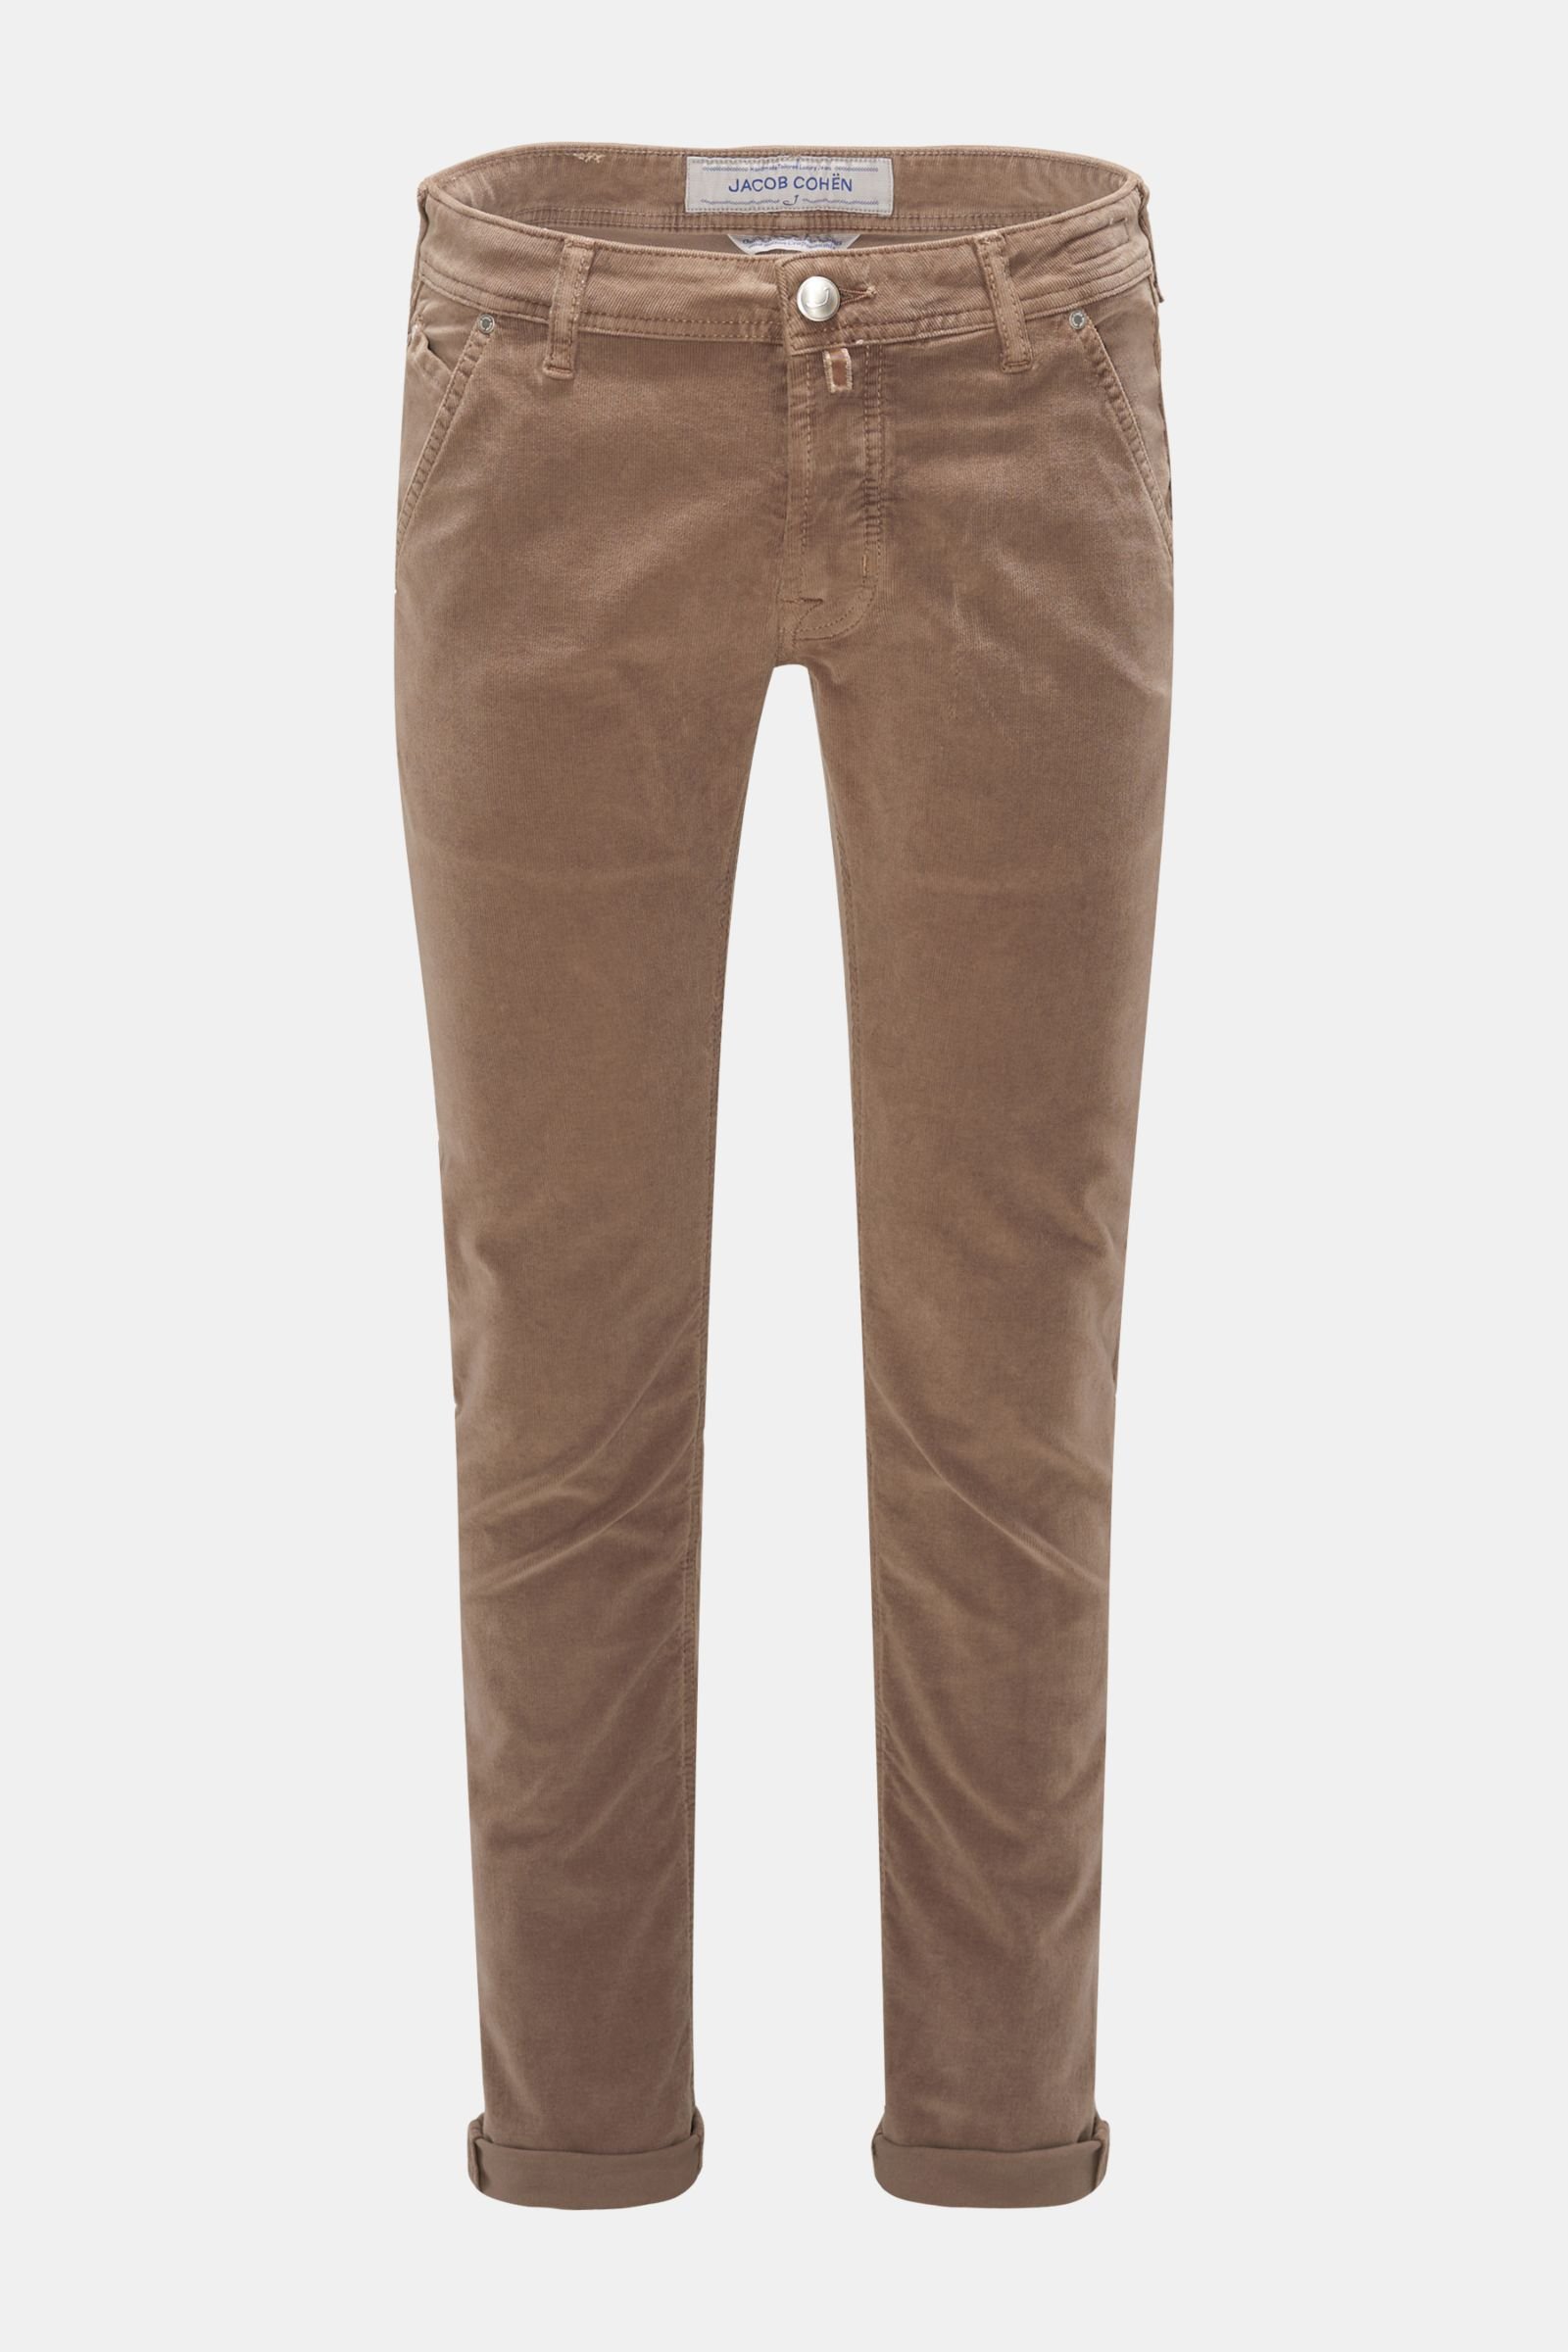 Corduroy trousers 'J613 Comfort Slim Fit' light brown